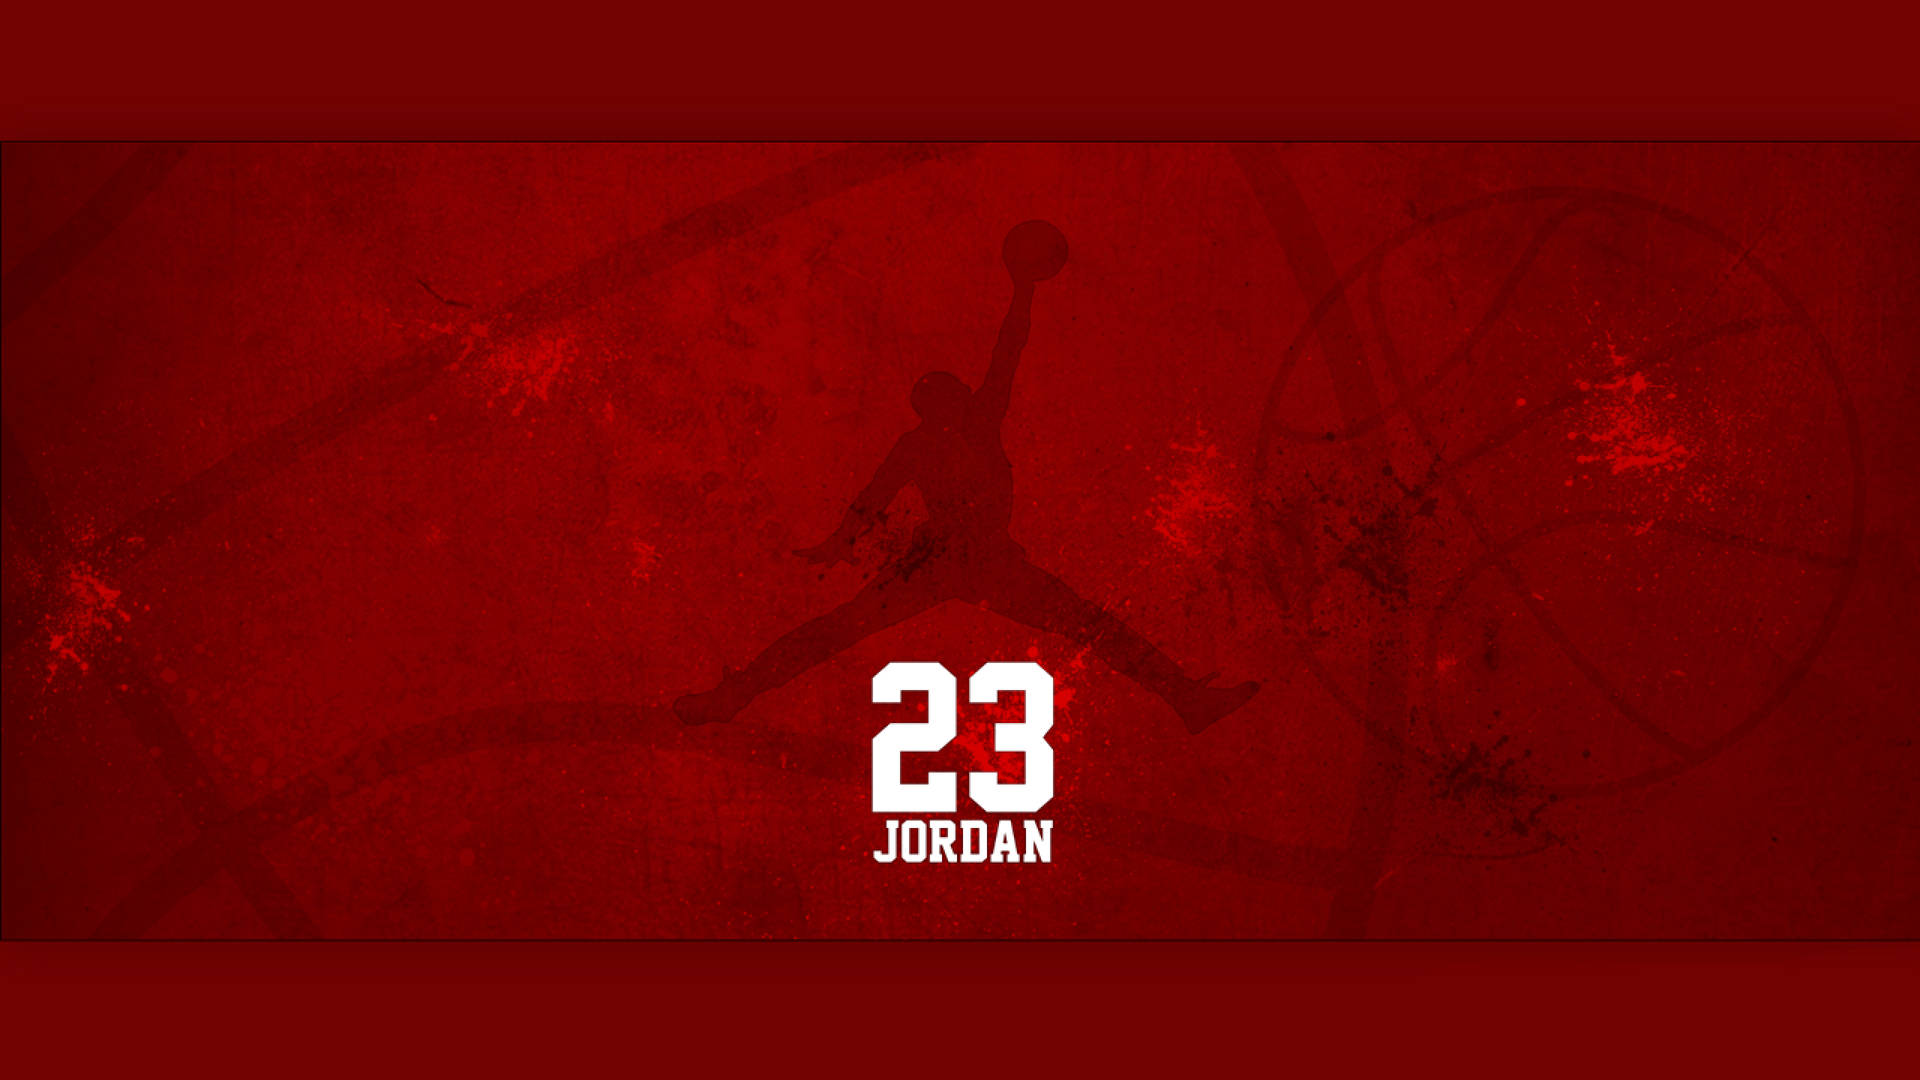 Air Jordan 2560X1440 Wallpaper and Background Image